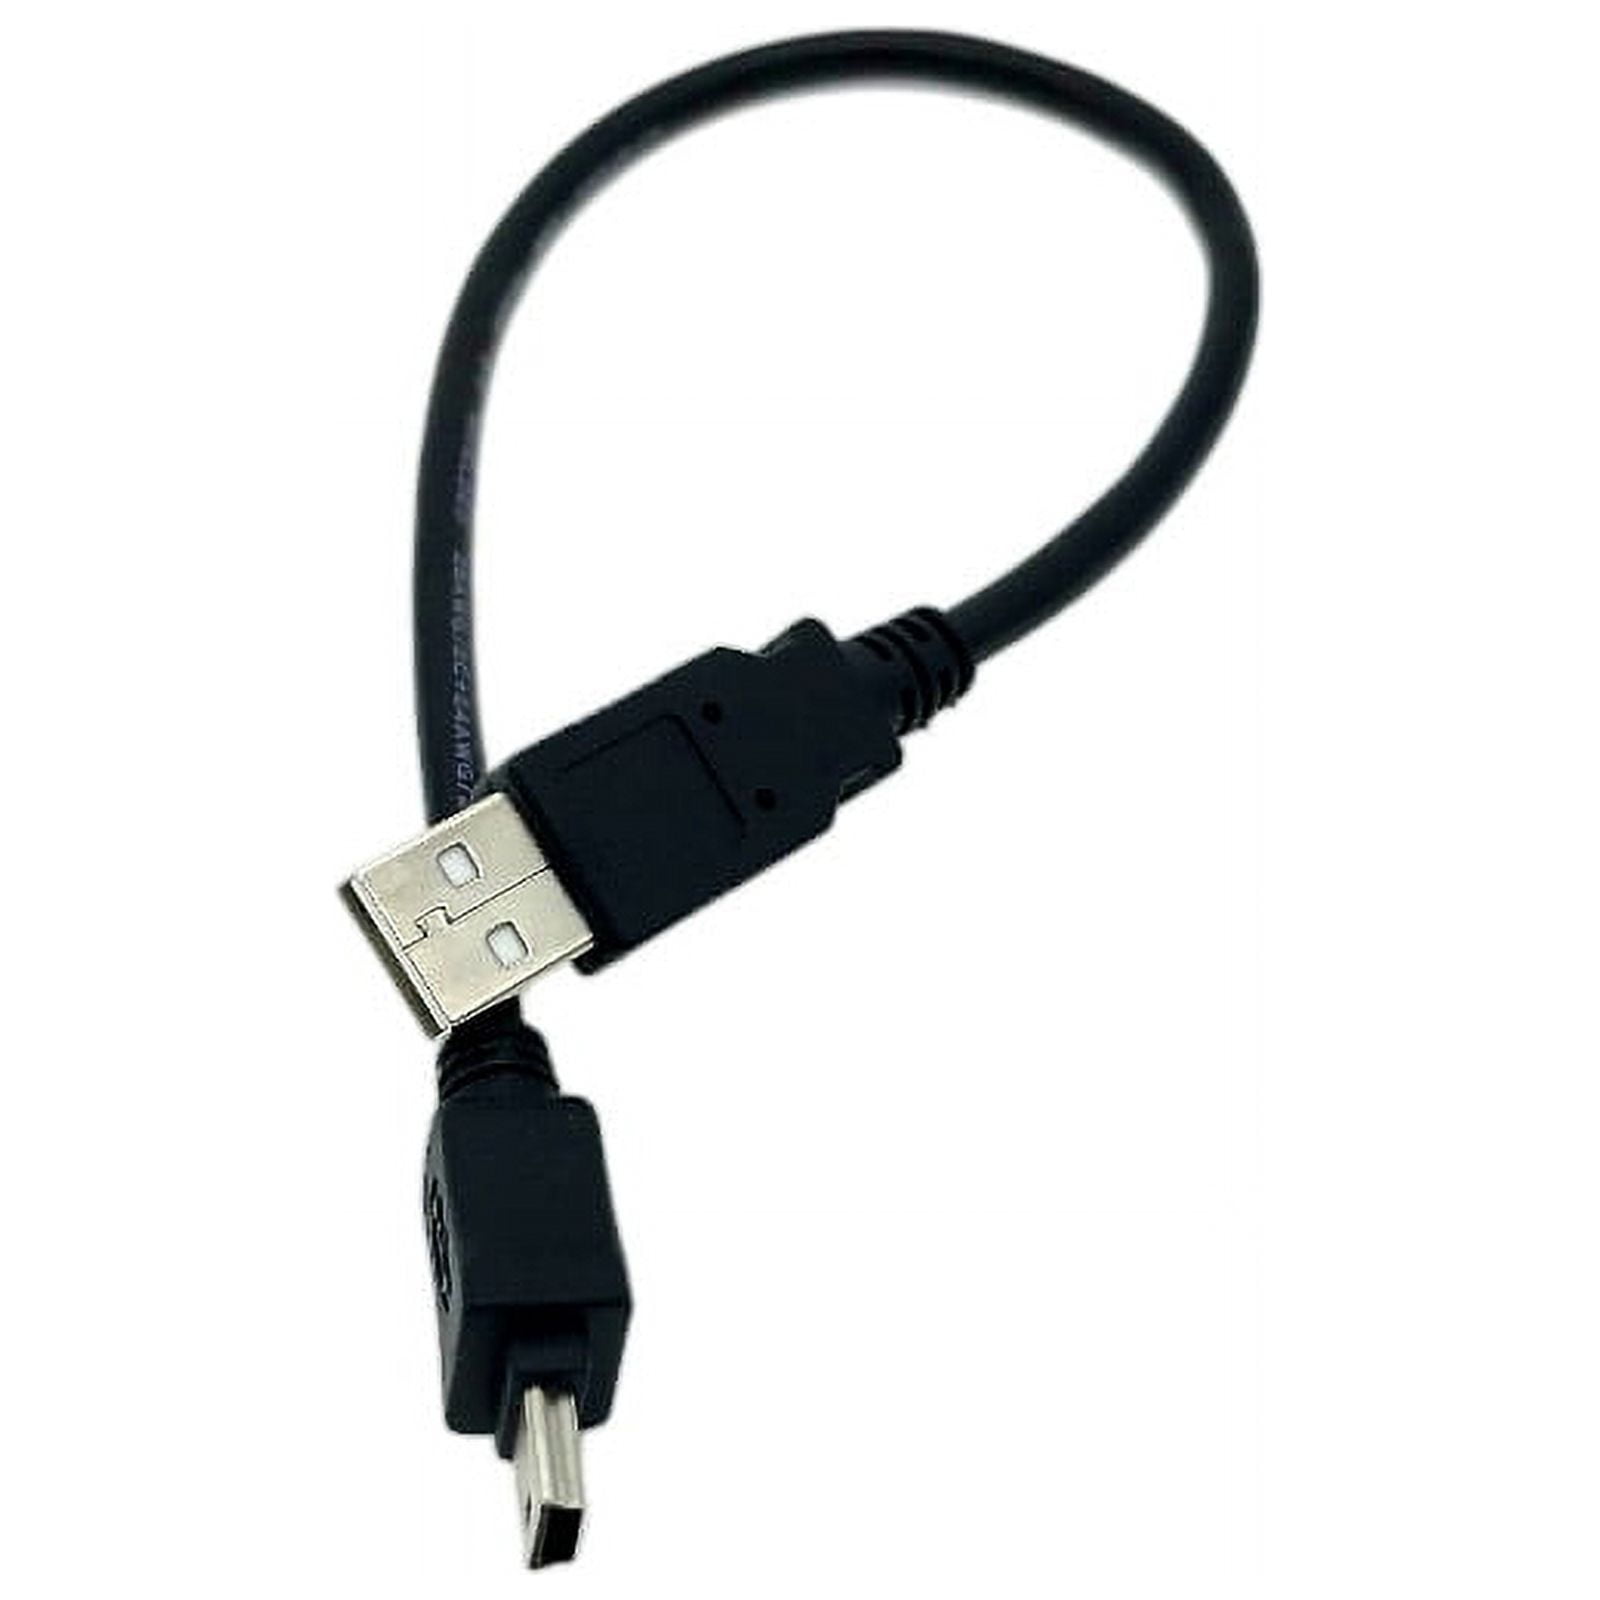  UGREEN Mini USB Cable 3FT,USB Mini Cable Mini USB 2.0 Cable,USB  Mini B Cord Mini USB Charger Cable Compatible with Garmin Nuvi  GPS,SatNav,Dash Cam,Camera,PS3 Controller,Hard Drive,GoPro Hero 3+